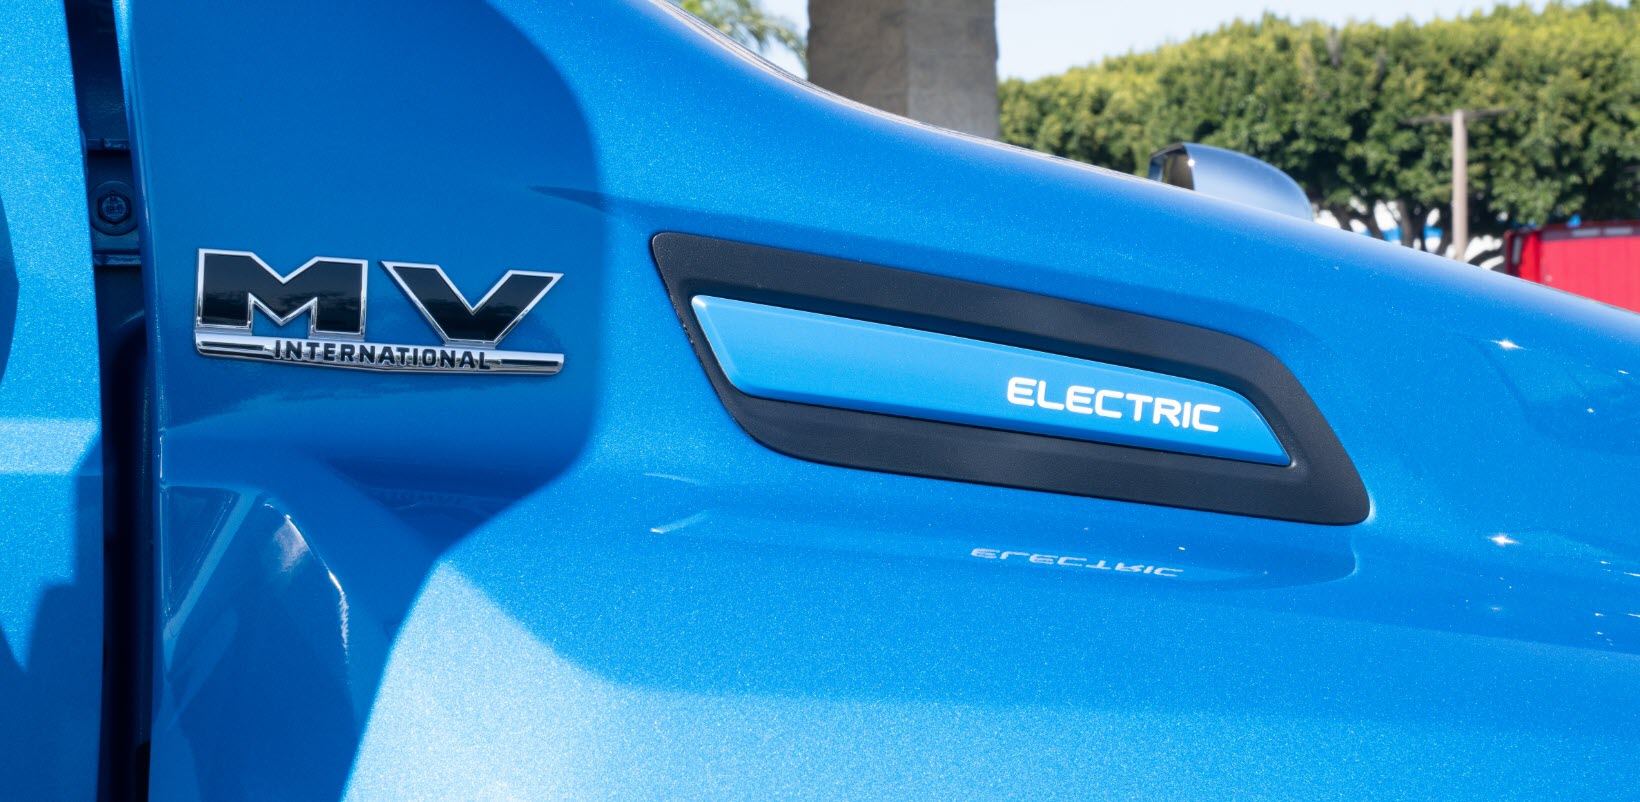 Blue eMV Electric side of truck